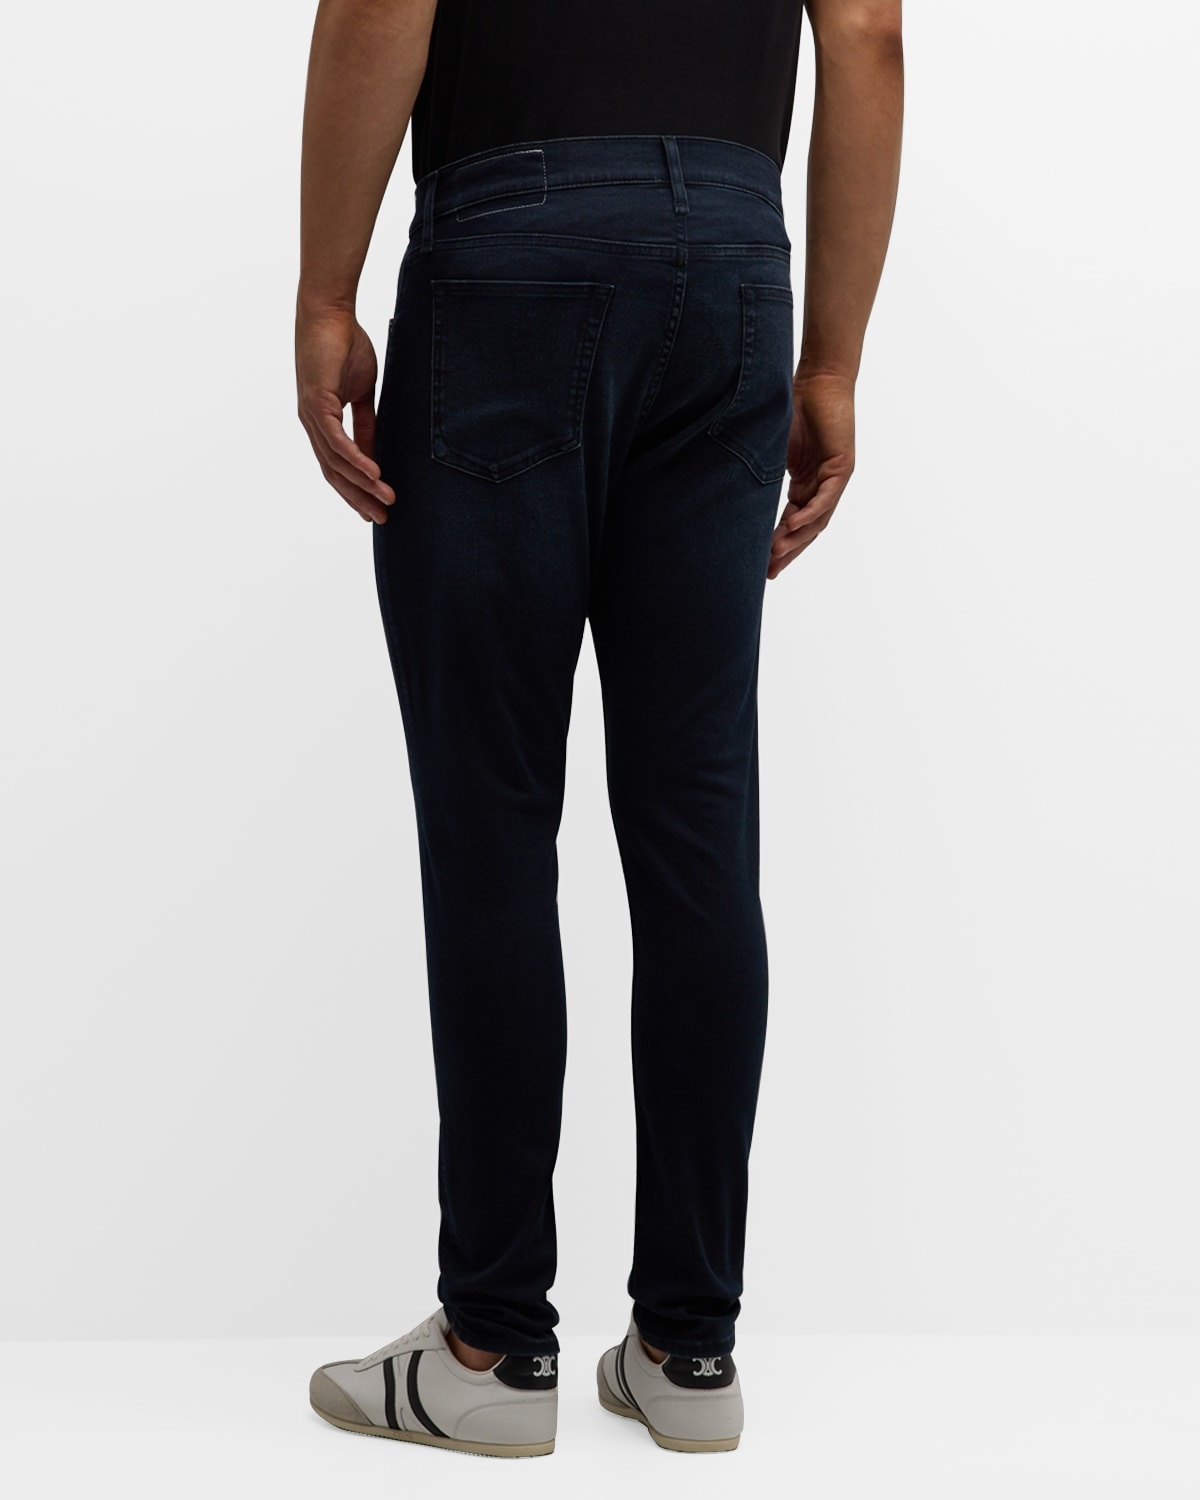 Men's Fit 1 Aero Stretch Denim Skinny Jeans - 4